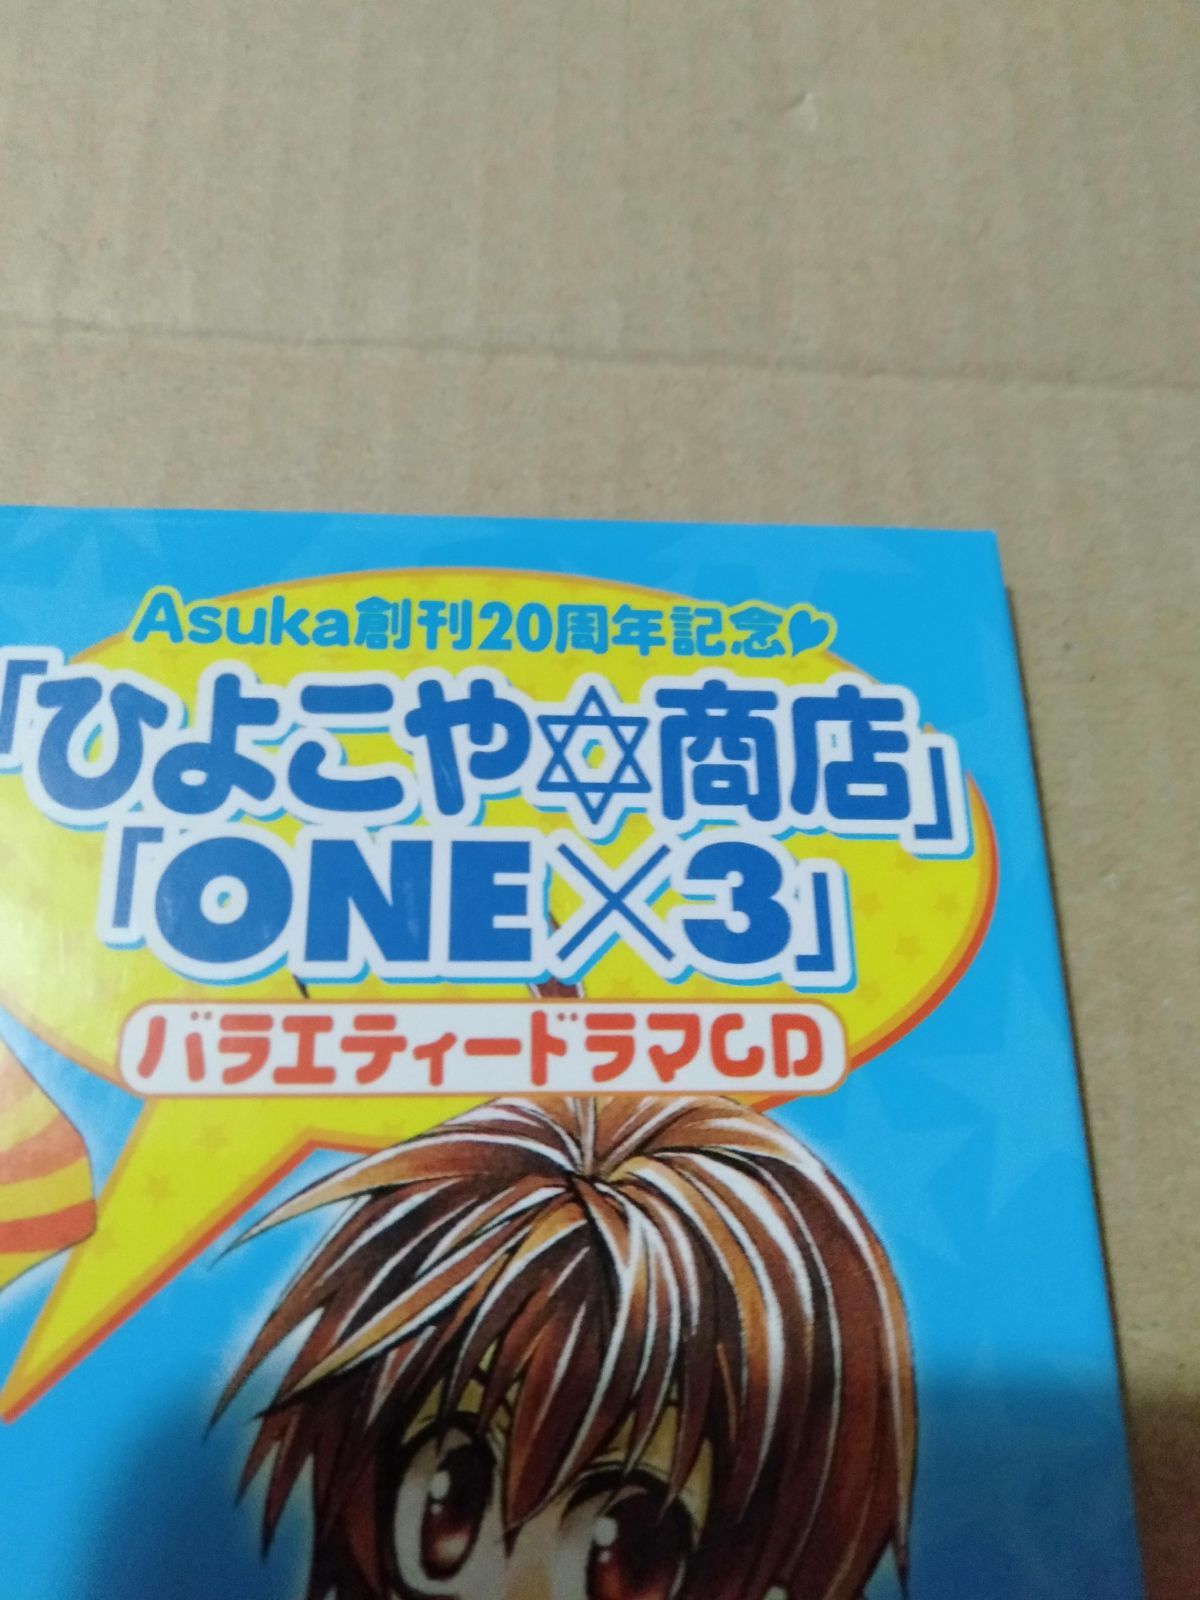 CD】Asuka創刊20周年記念「ひよこや商店」「ONE×3」バラエティードラマCD - メルカリ